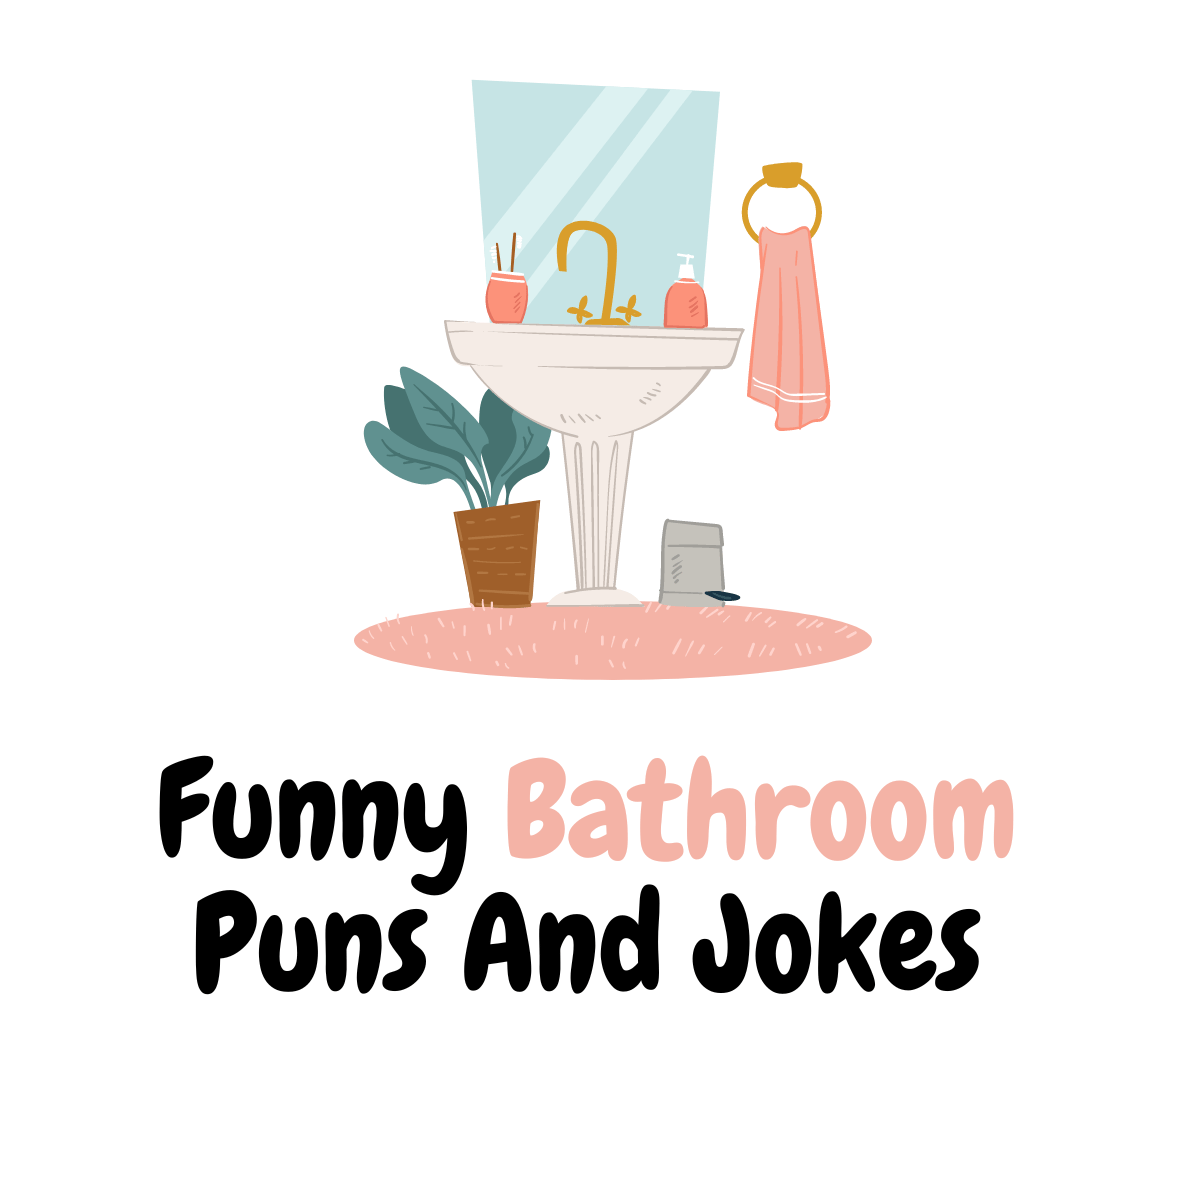 funny Bathroom Puns and jokes